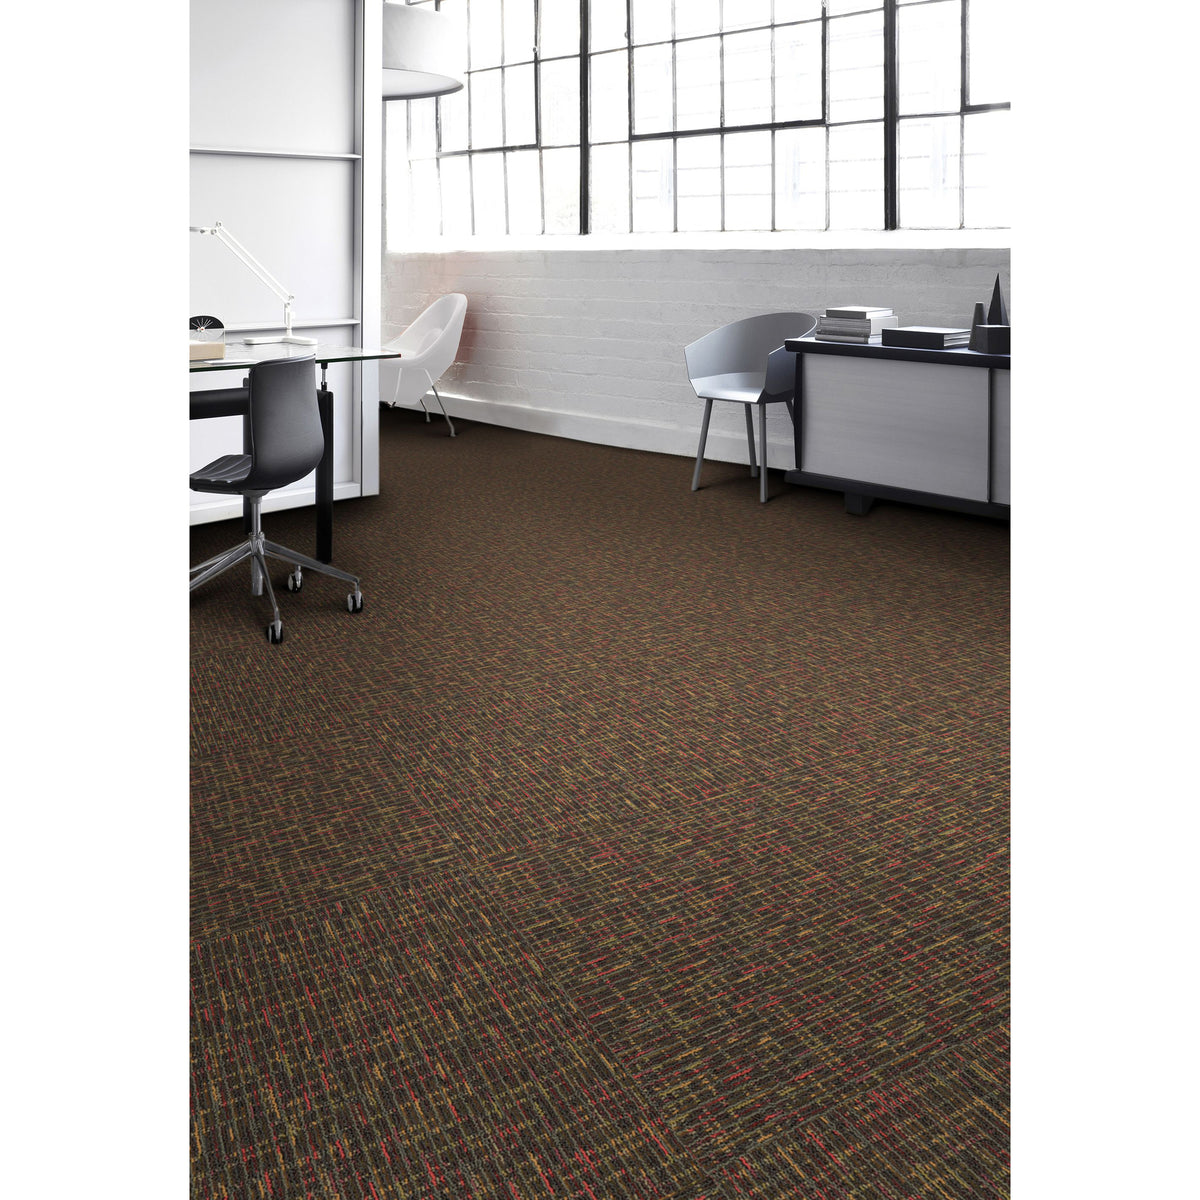 Aladdin Commercial - Define Collection - Clarify - Carpet Tile - Designate - Room Scene